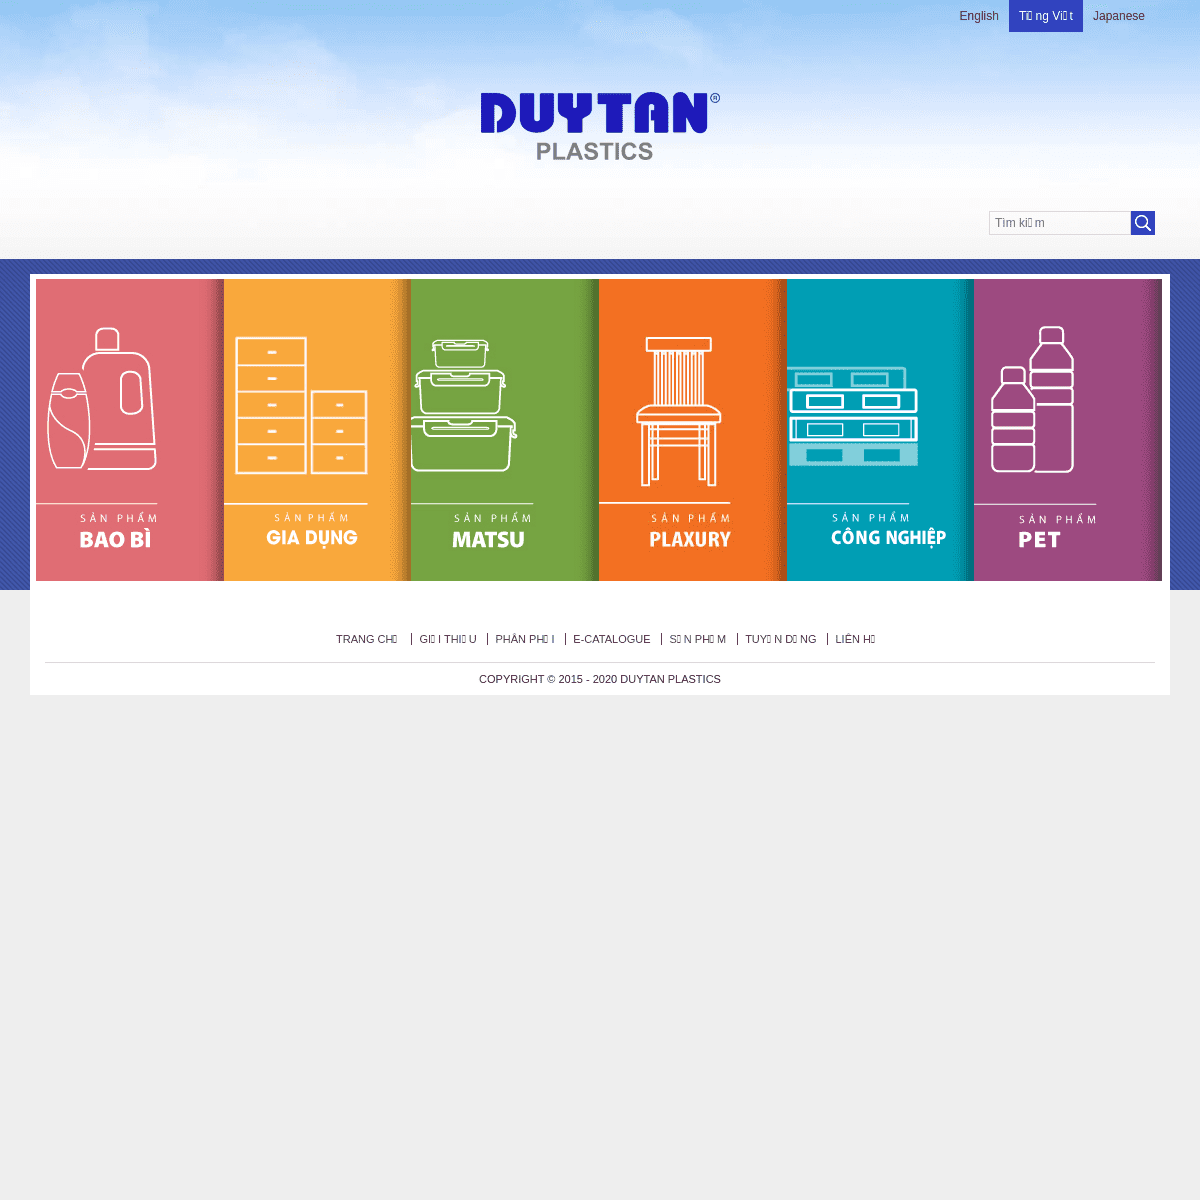 A complete backup of duytan.com